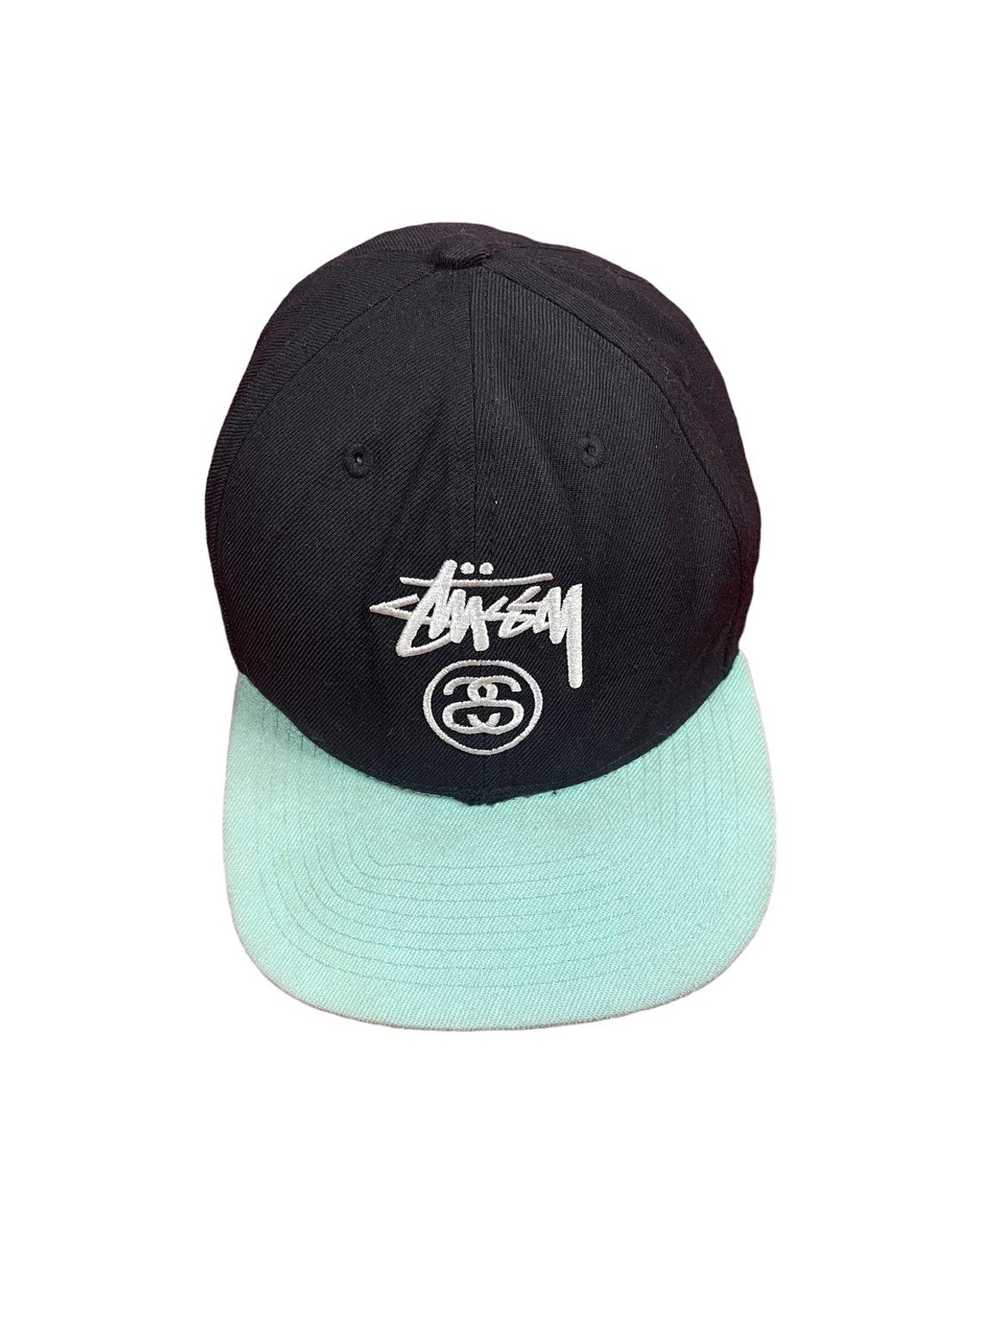 Starter × Stussy Stussy cap hat snapback - image 2